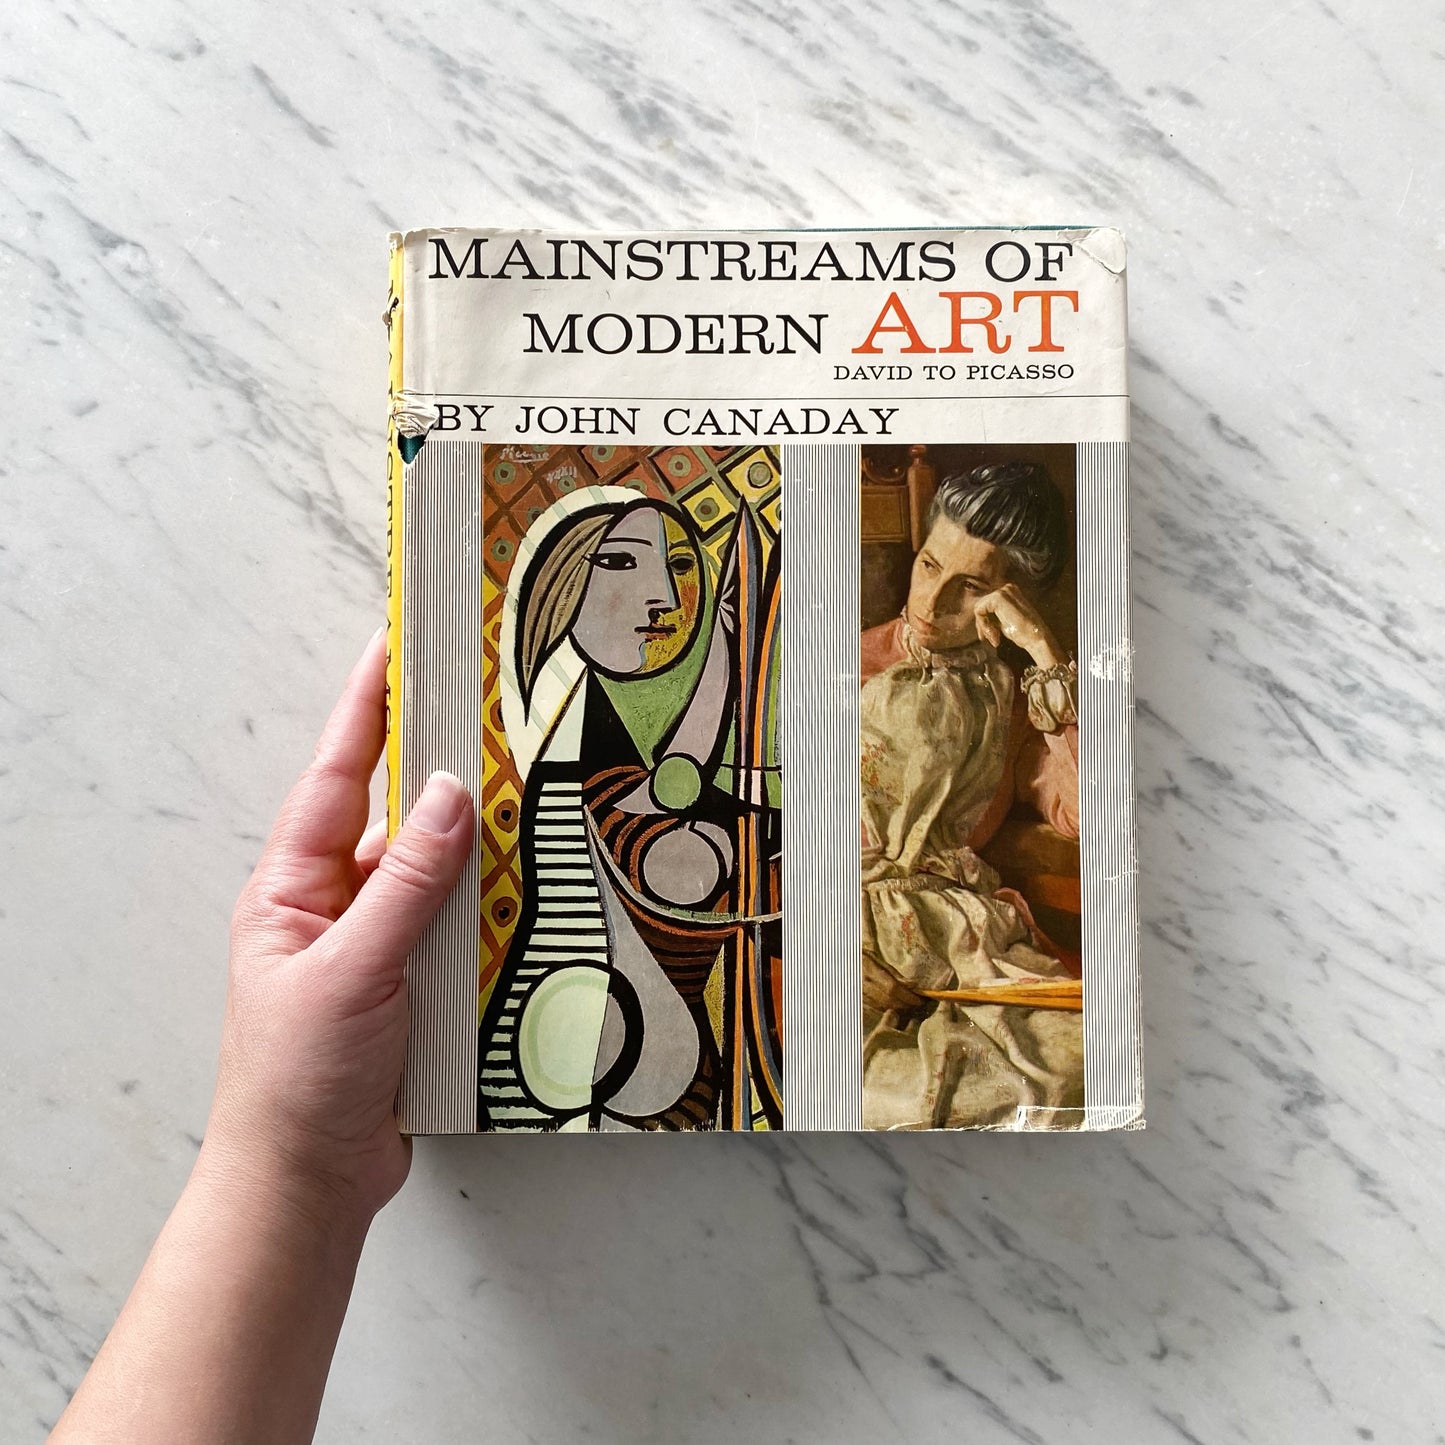 Book: Mainstreams of Modern Art  (1959)